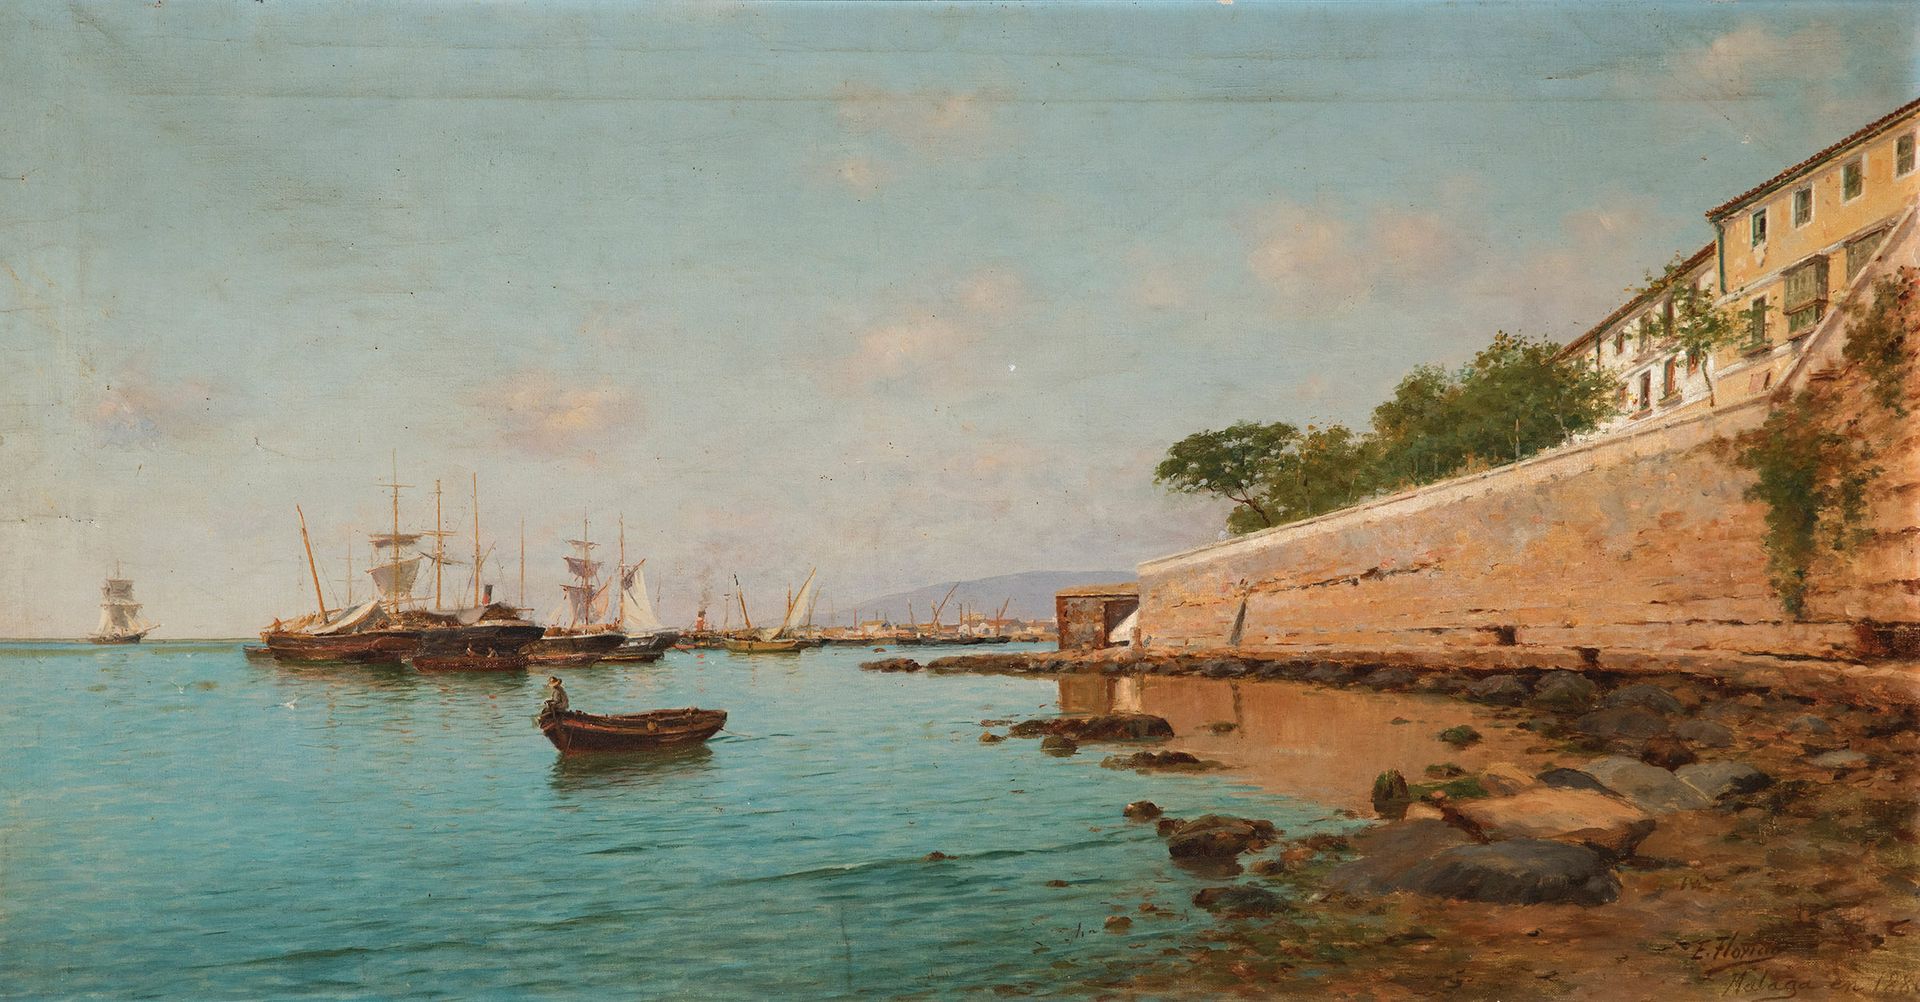 Null ENRIQUE FLORIDO BERNILS (Malaga, 1873 - 1929).
"Port of Malaga", 1880.
Oil &hellip;